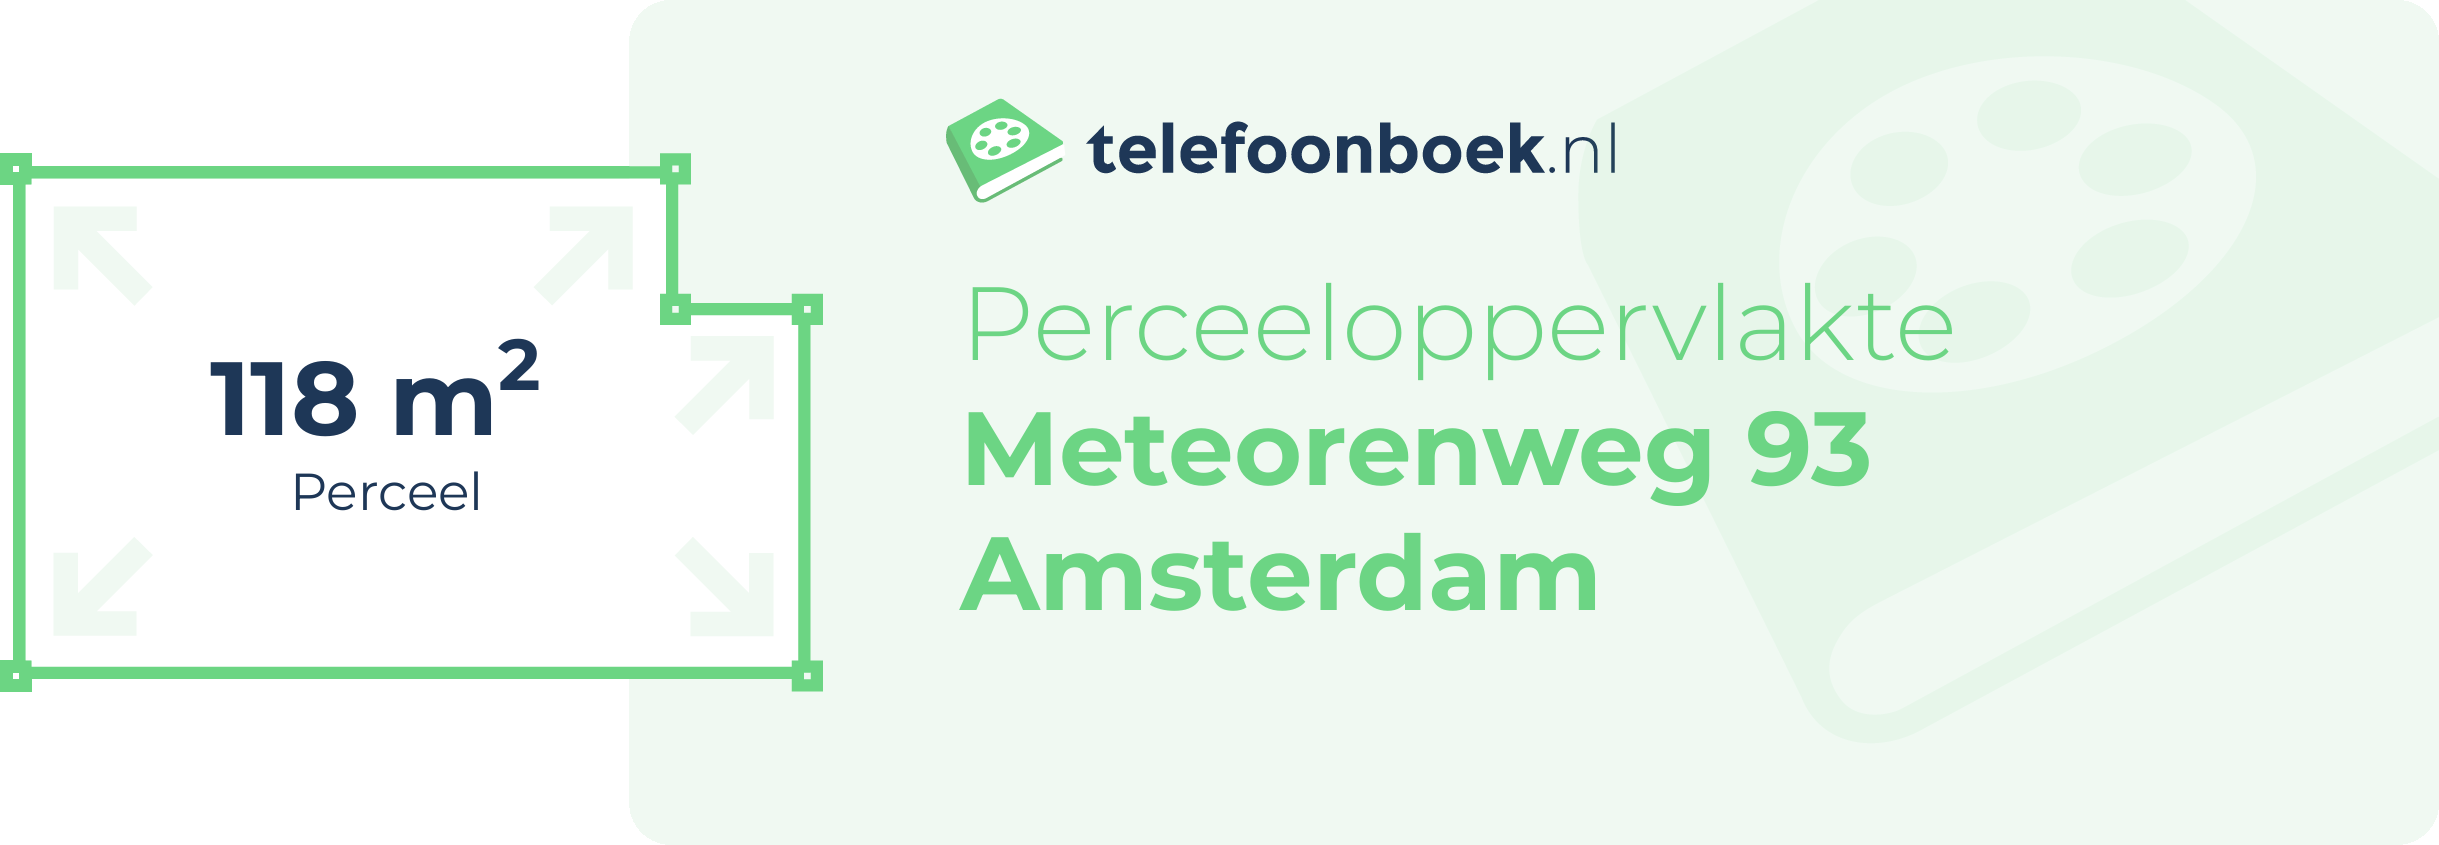 Perceeloppervlakte Meteorenweg 93 Amsterdam